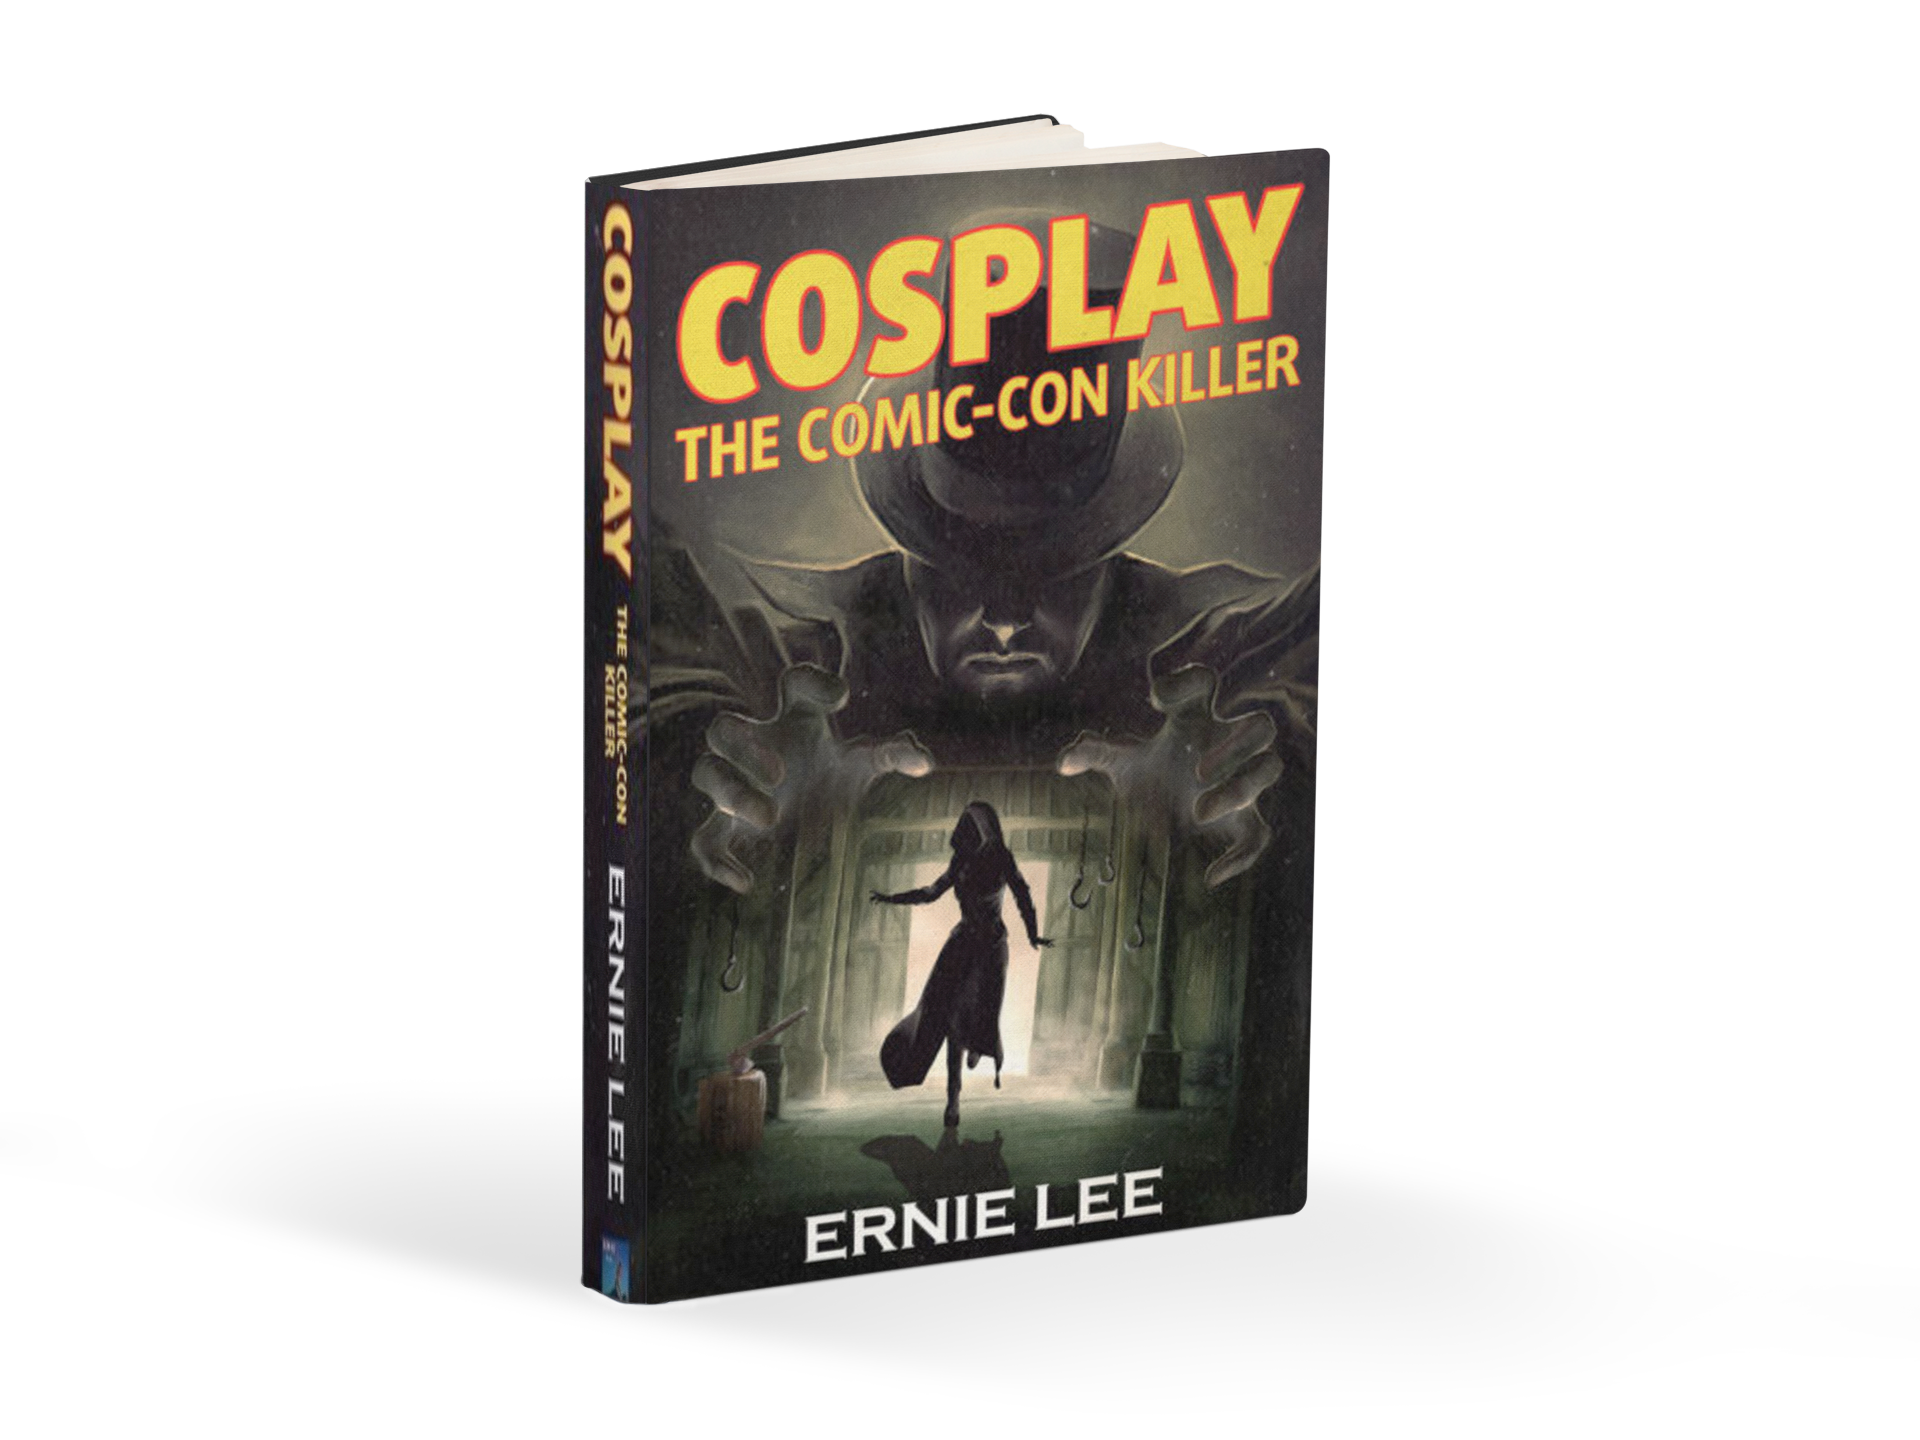 Award-Winning Author, Ernie Lee, Pens Comic-Con Themed Thriller